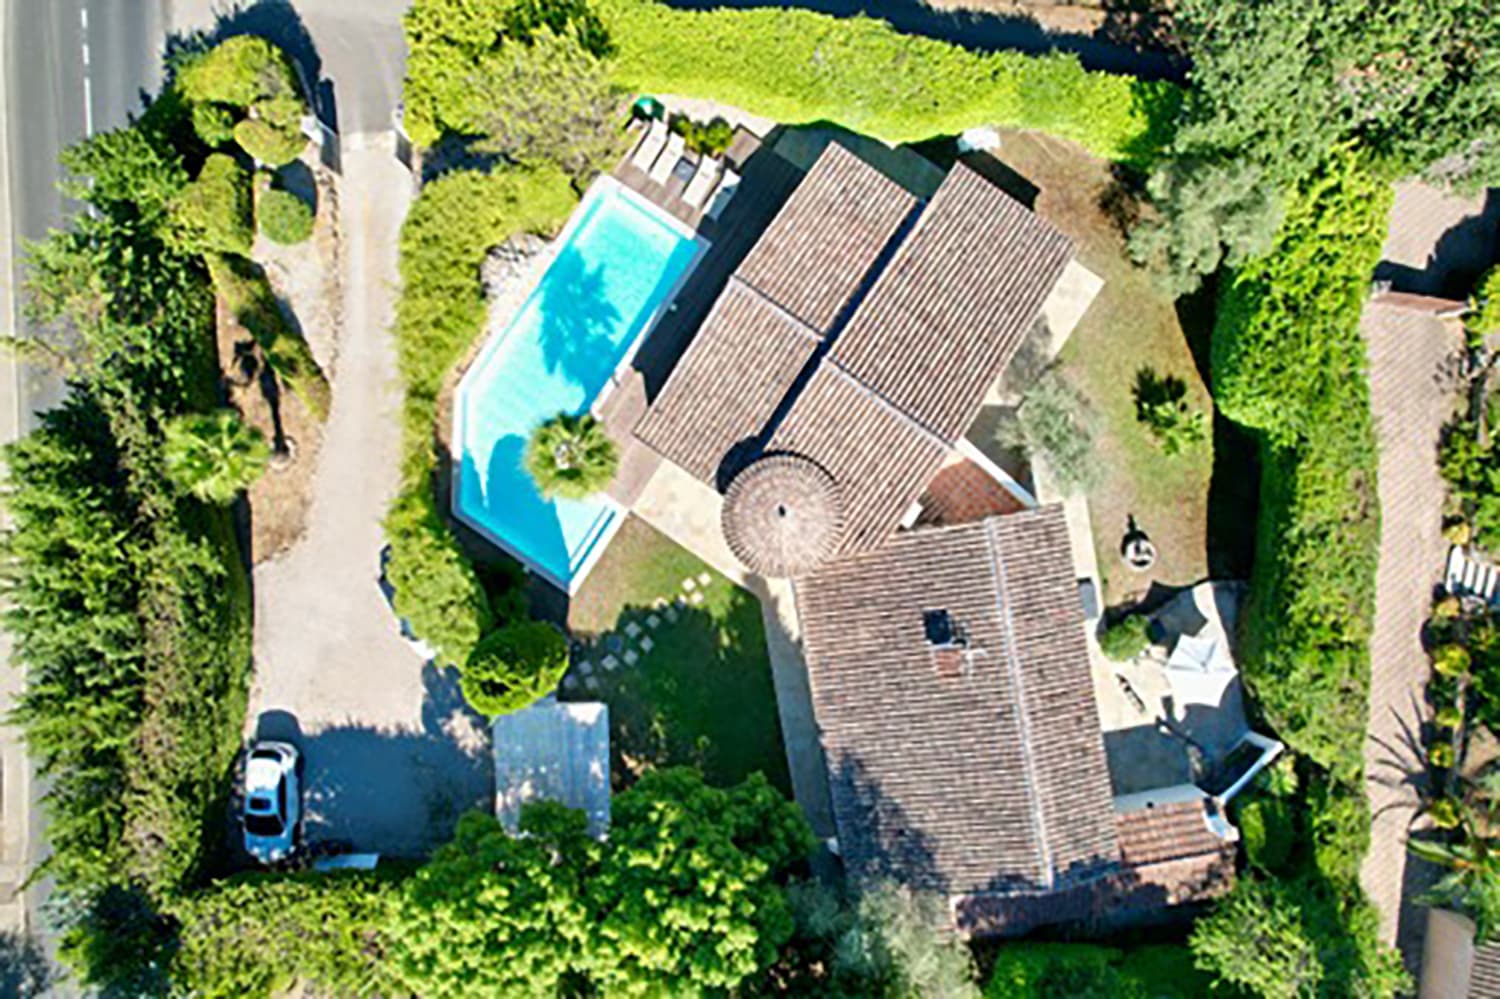 Villa de vacances en Provence with private pool